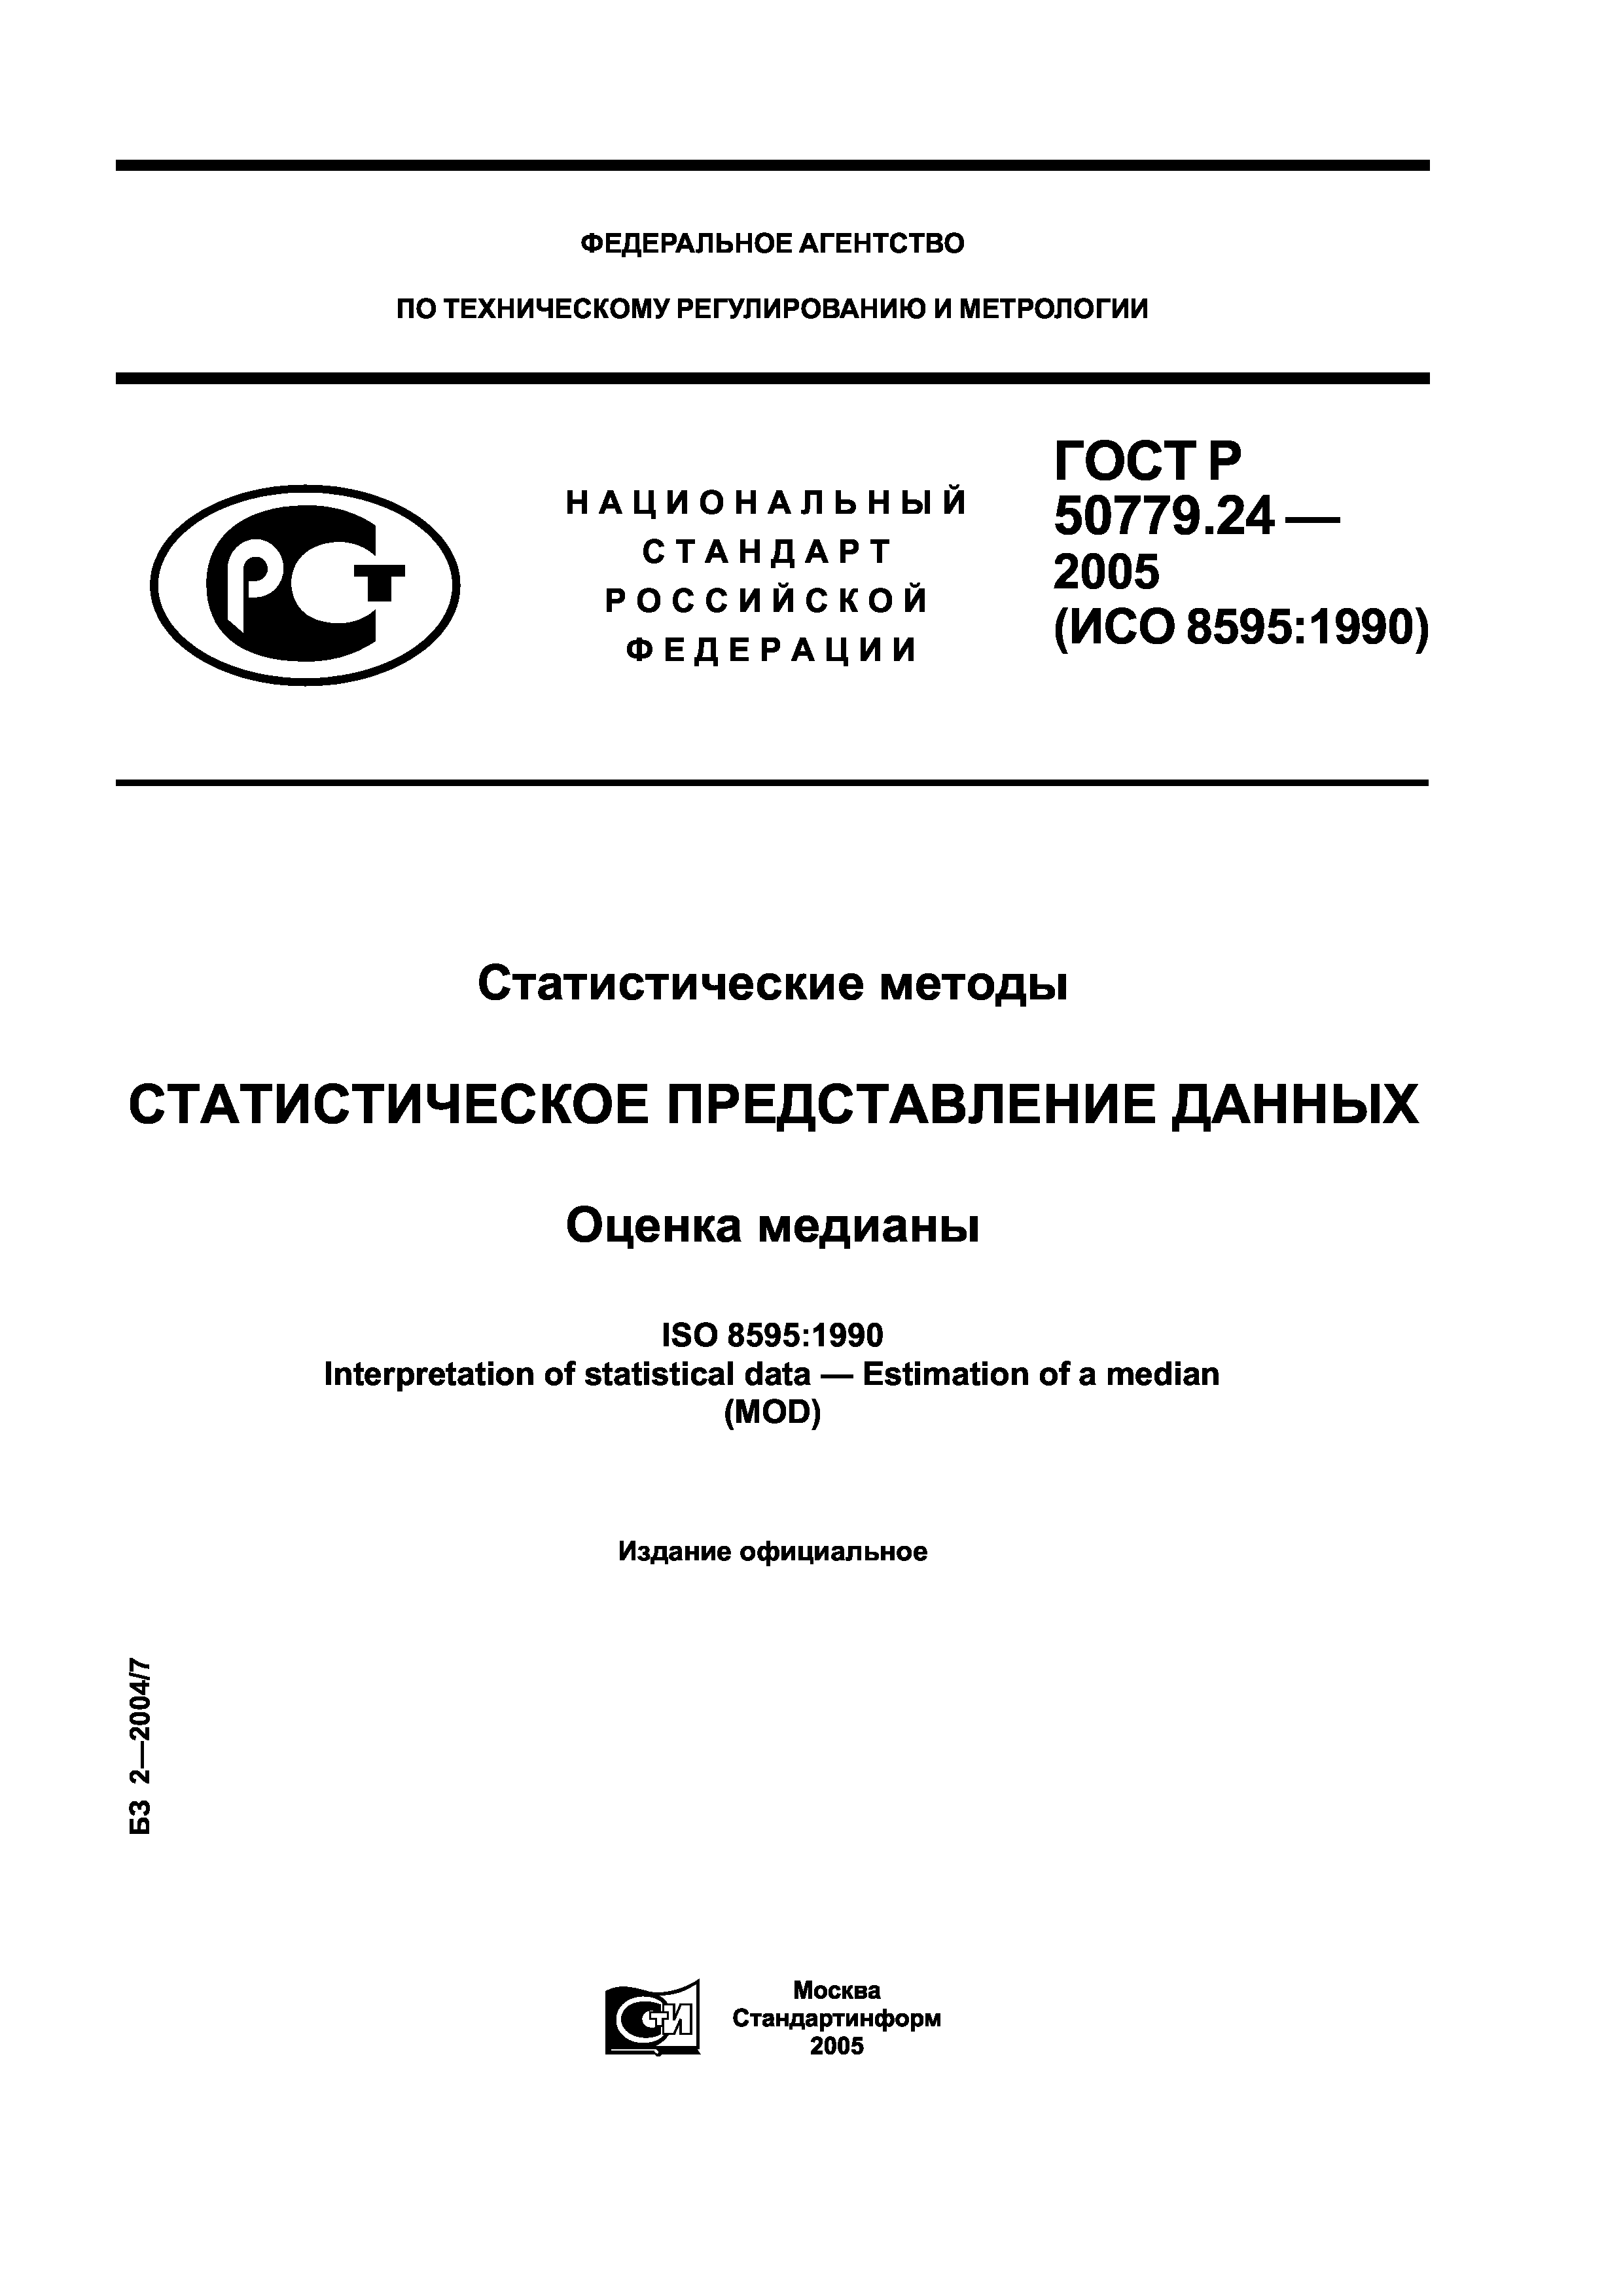 ГОСТ Р 50779.24-2005